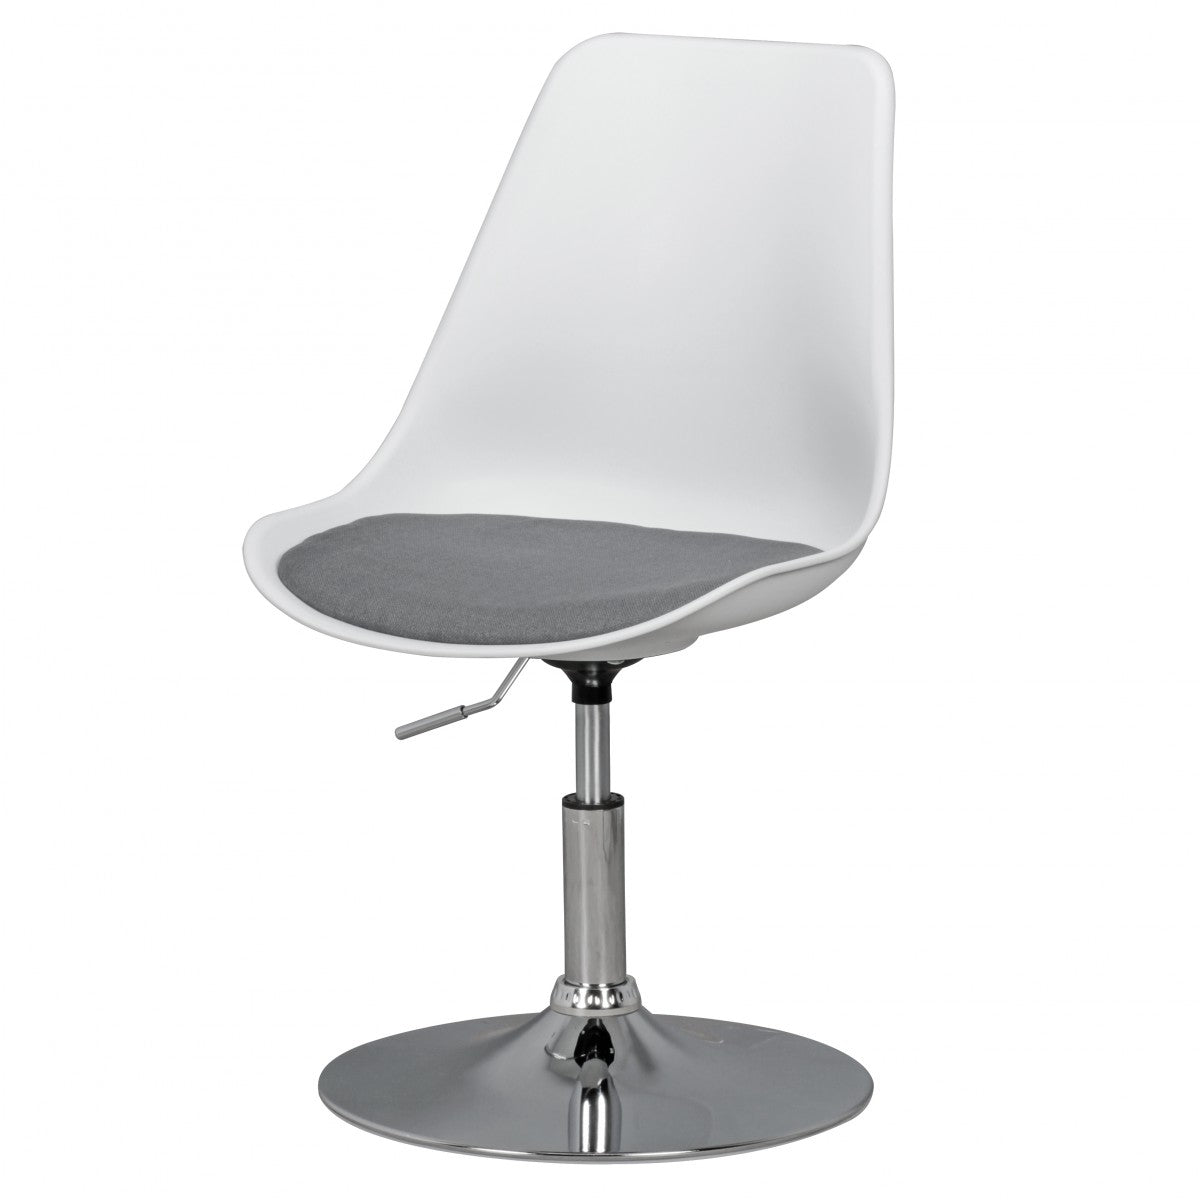 Nancy's Forks Armchair - Swivel armchair - Waiting room chair - Dining room chair - Visitor chair - Swivel chair - Fabric - White